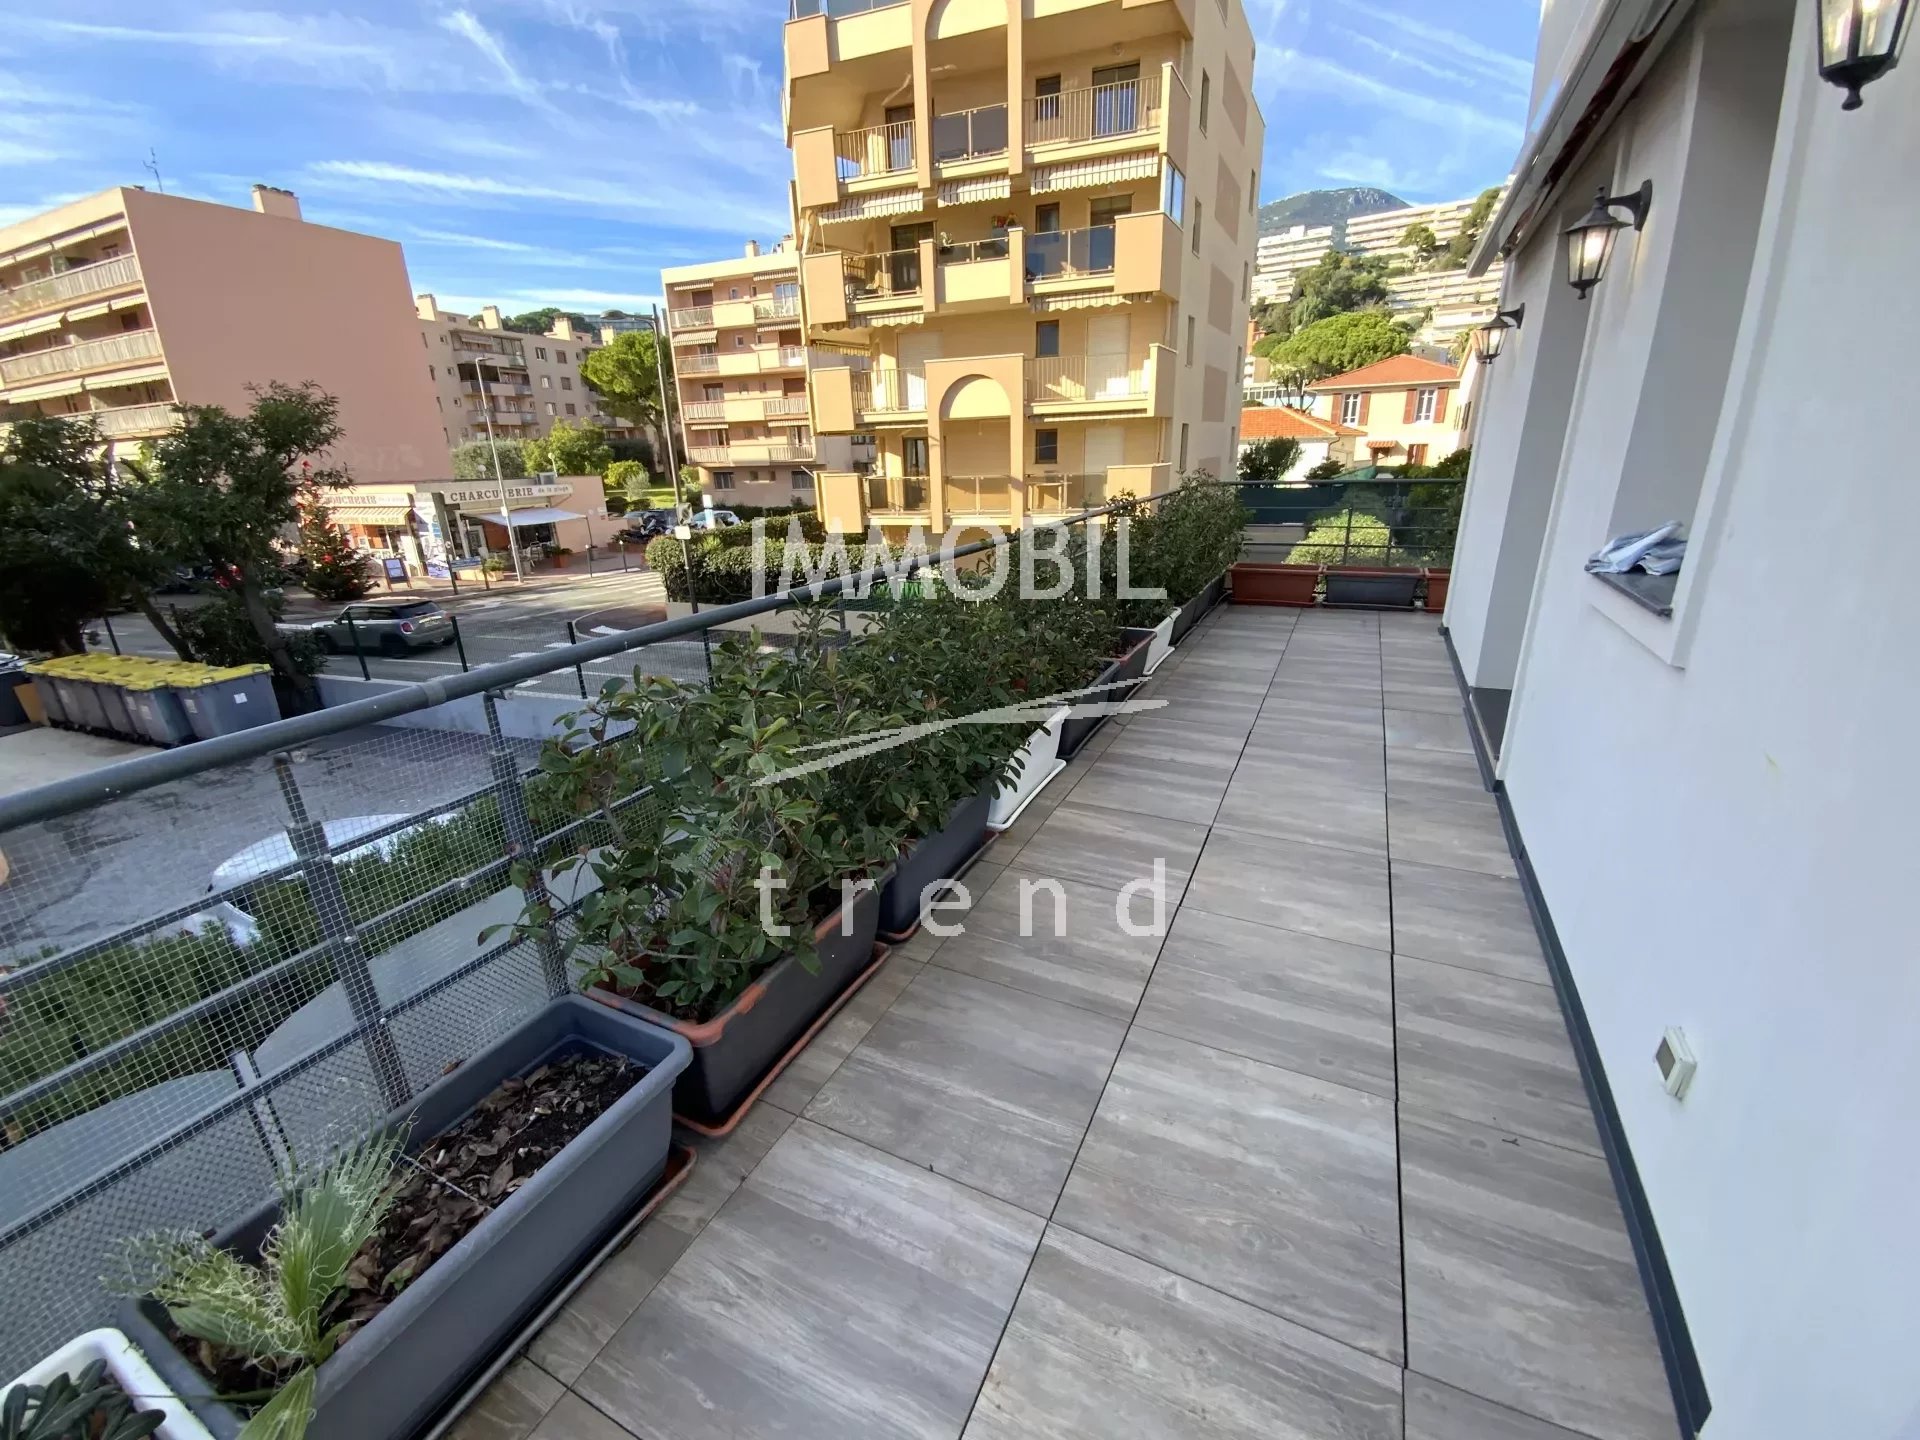 Vente Appartement 44m² 3 Pièces à Roquebrune-Cap-Martin (06190) - Immobiltrend